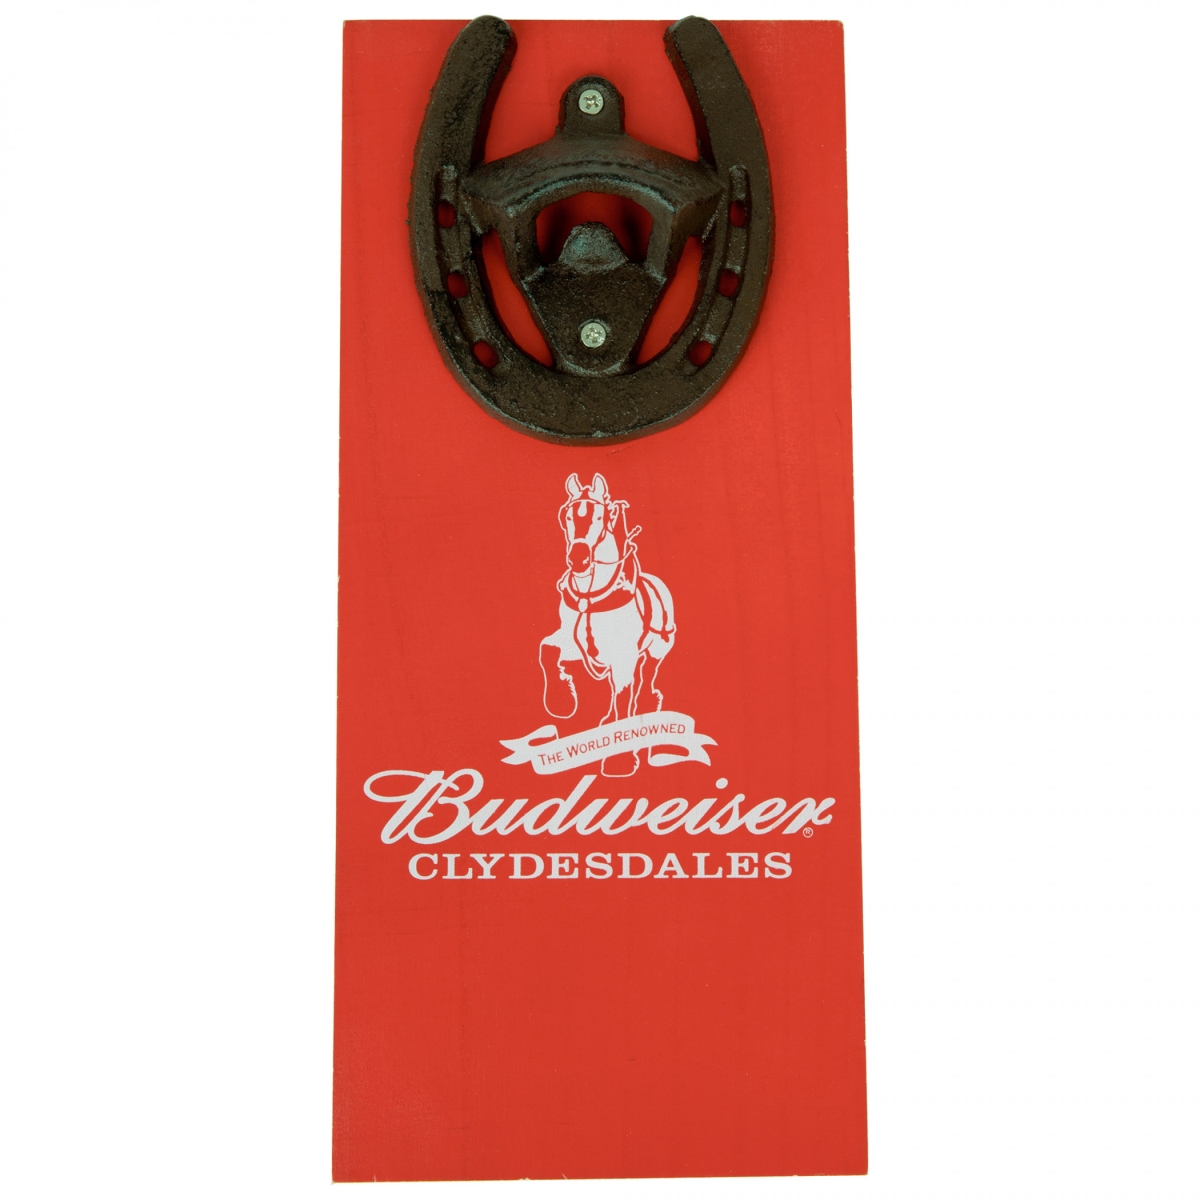 851538 Clydesdales Horseshoe Bottle Opener -  Budweiser